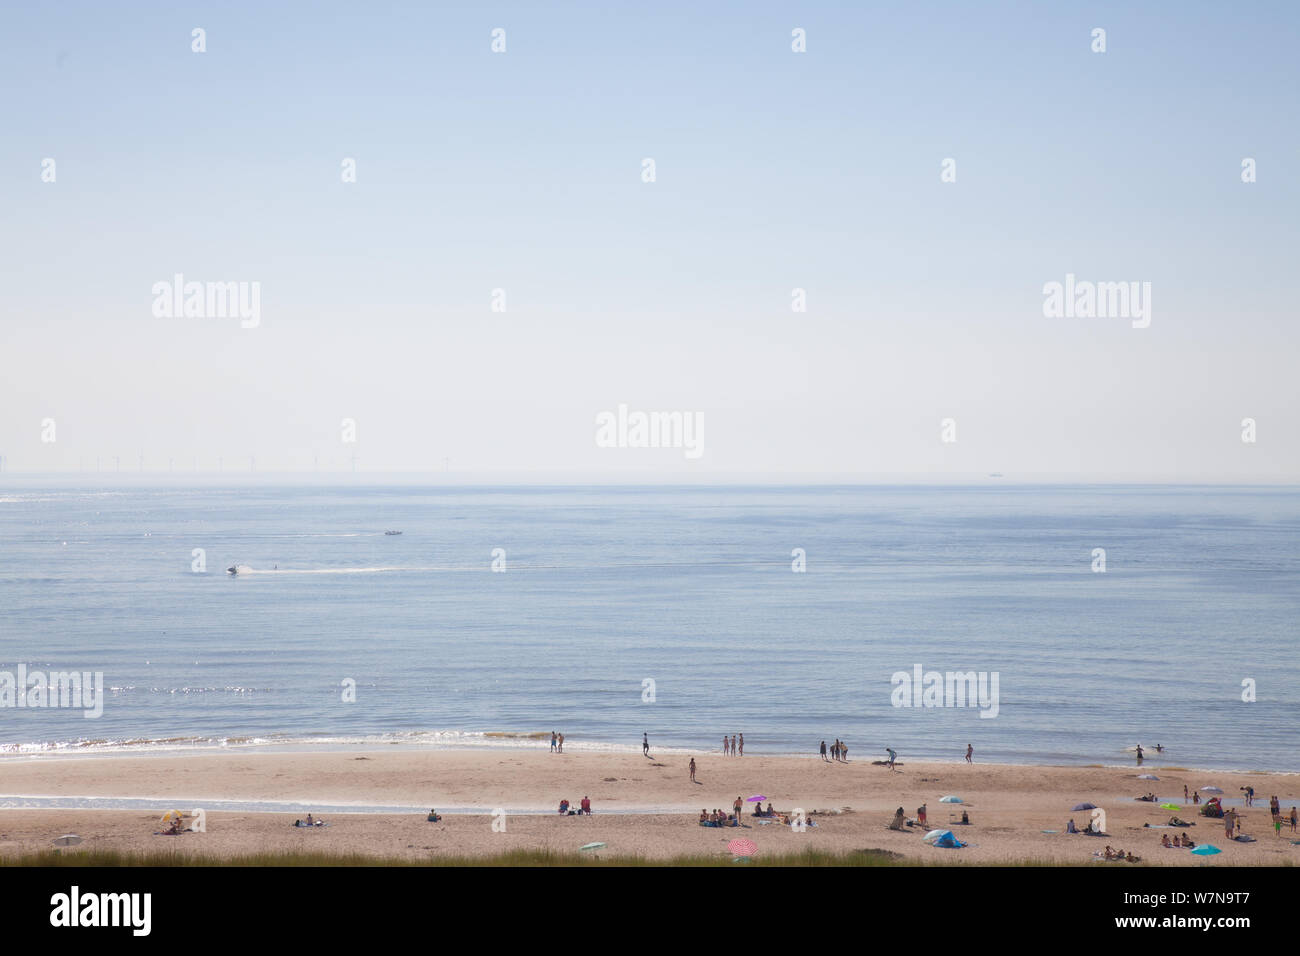 Egmond aan Zee, Netherlands - bathing people on the beach in the glistening sun (high key exposure) Stock Photo